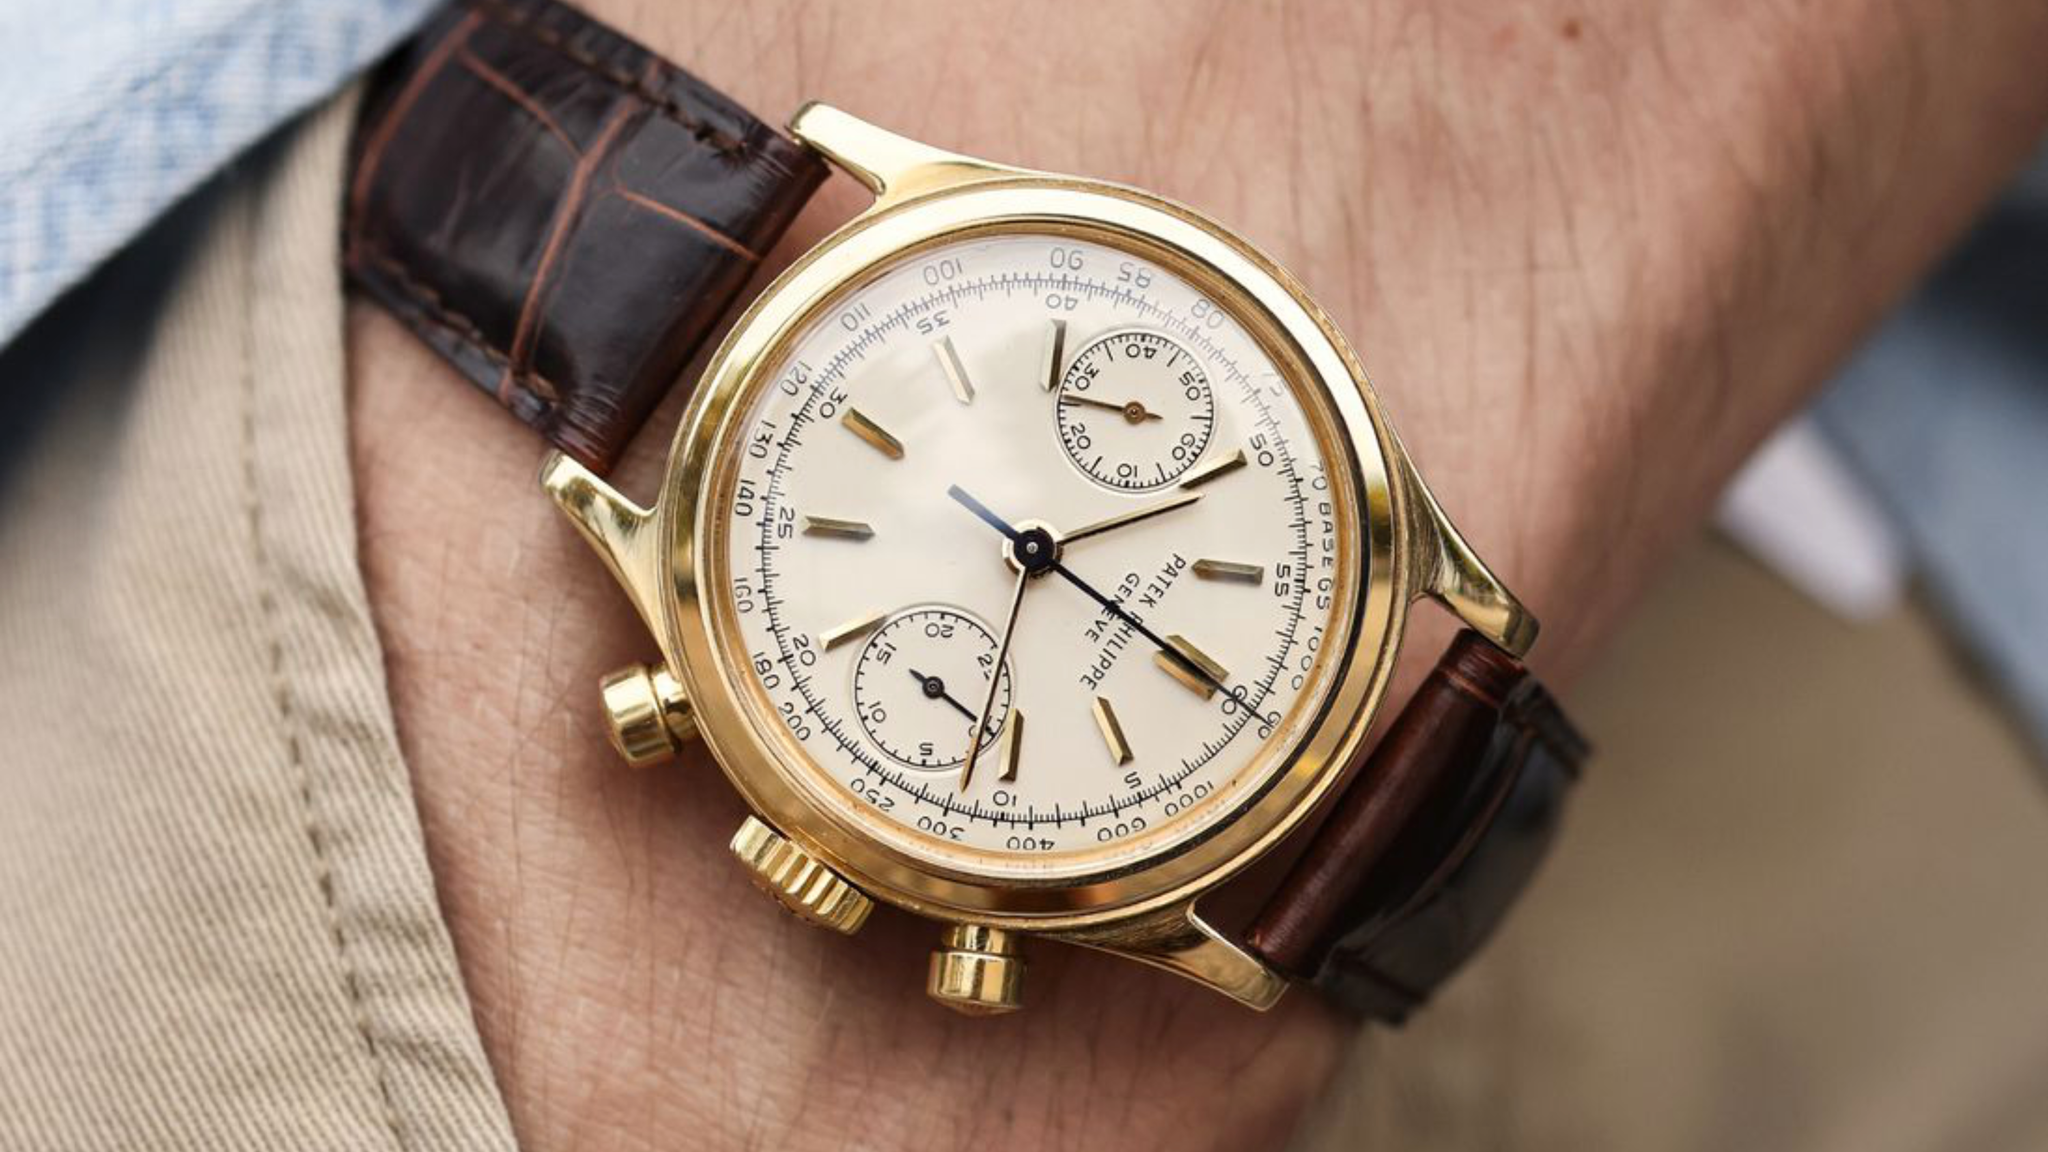 Wrist shot of a vintage 1960s Patek Philippe ref. 1463 Tasti Tondi chronograph watch with ebony dial